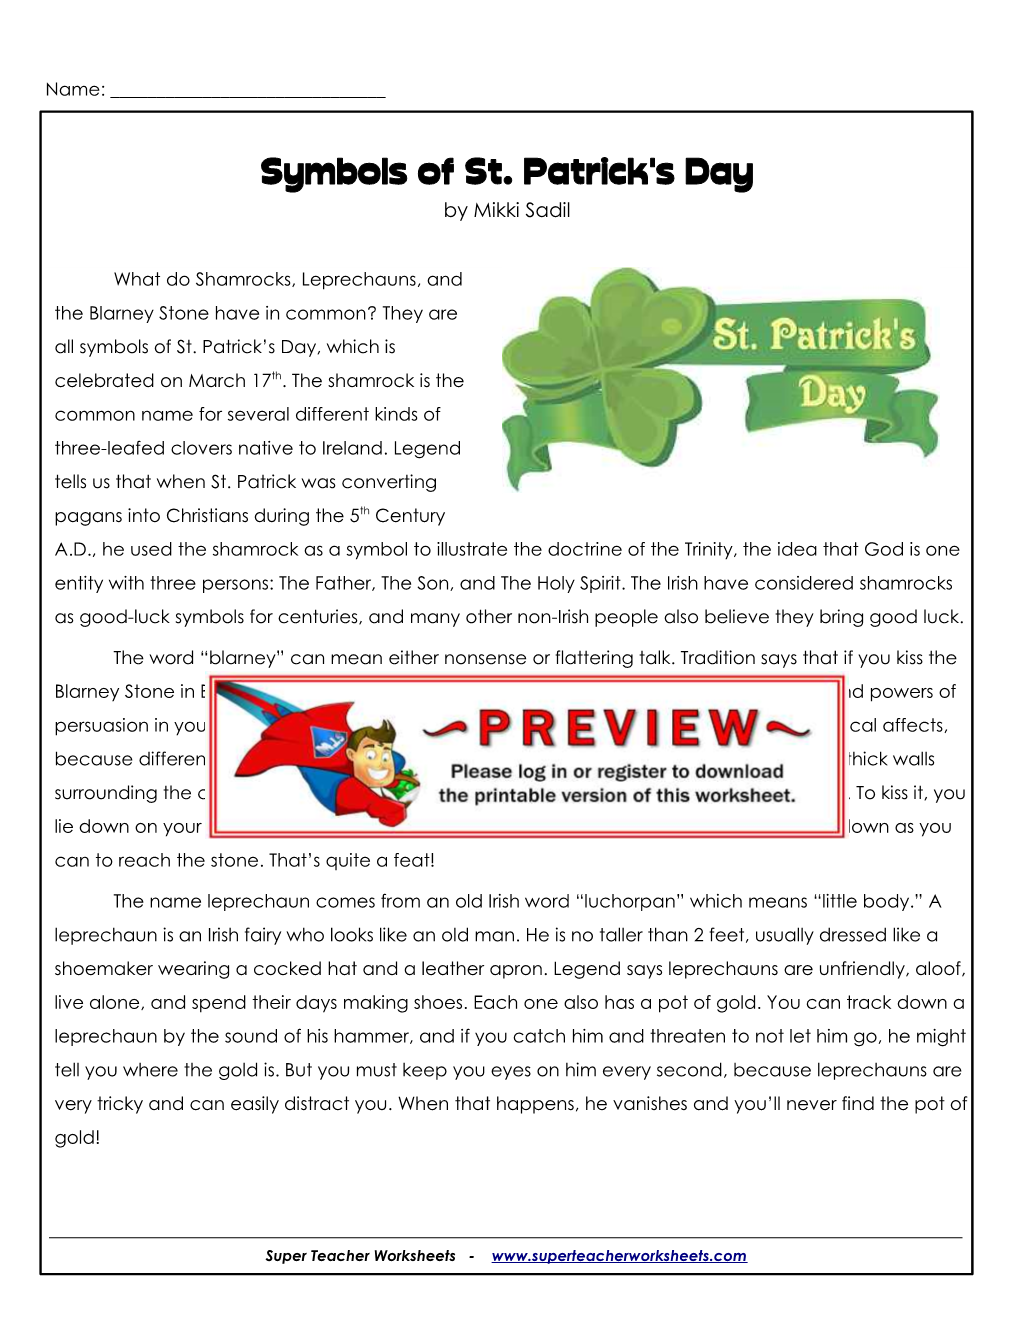 Symbols of St. Patrick's Day by Mikki Sadil